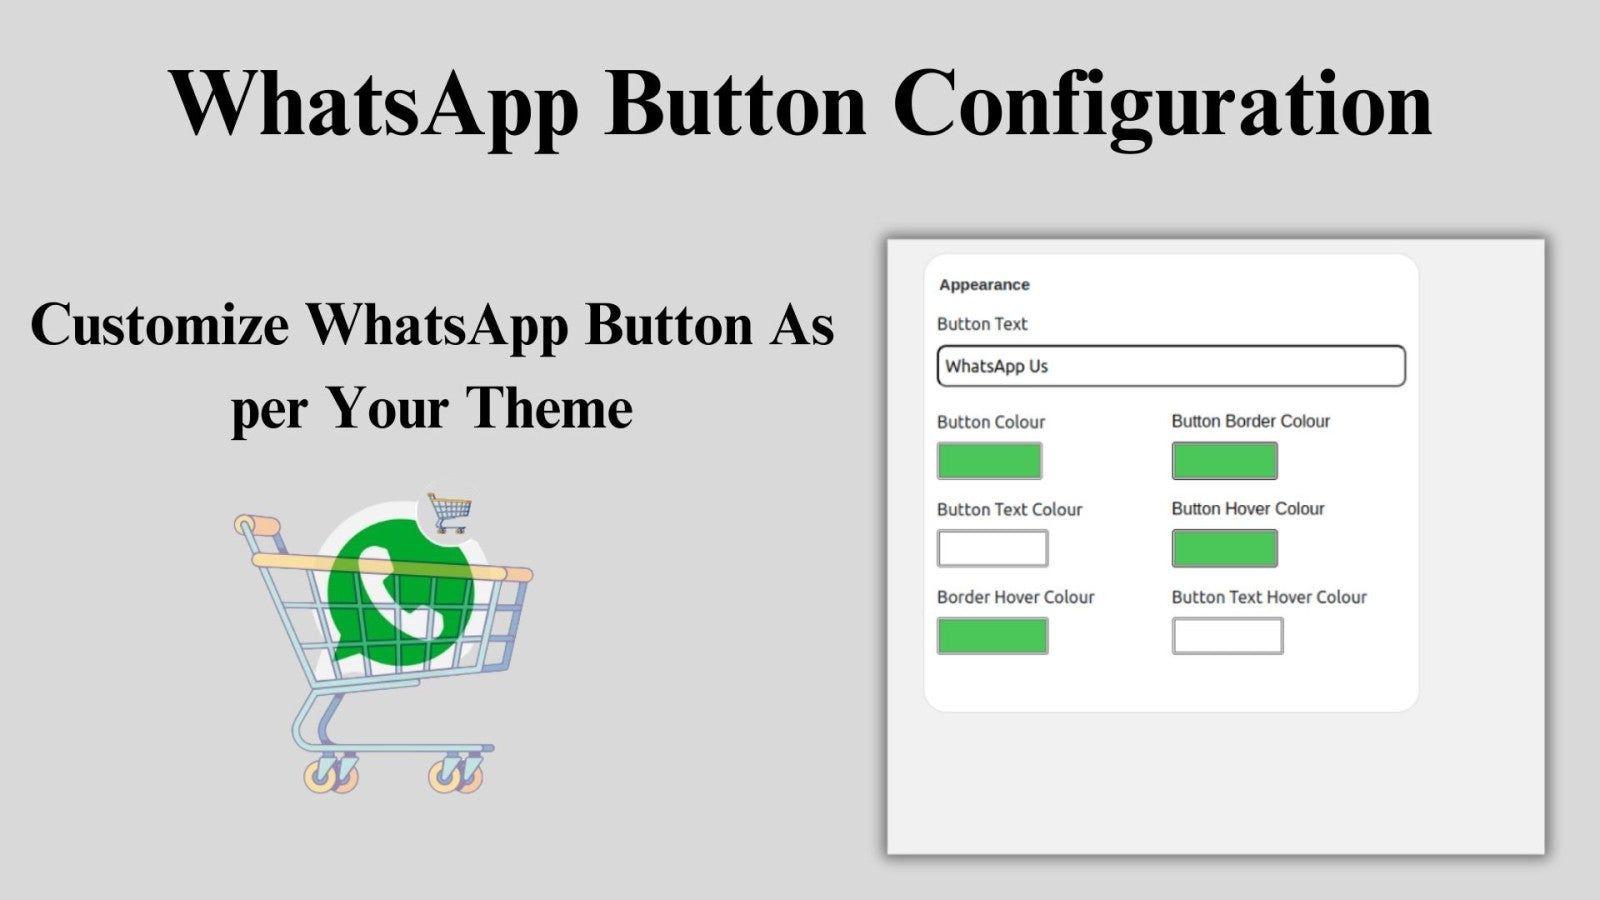 WhatsApp Button Configuration Image